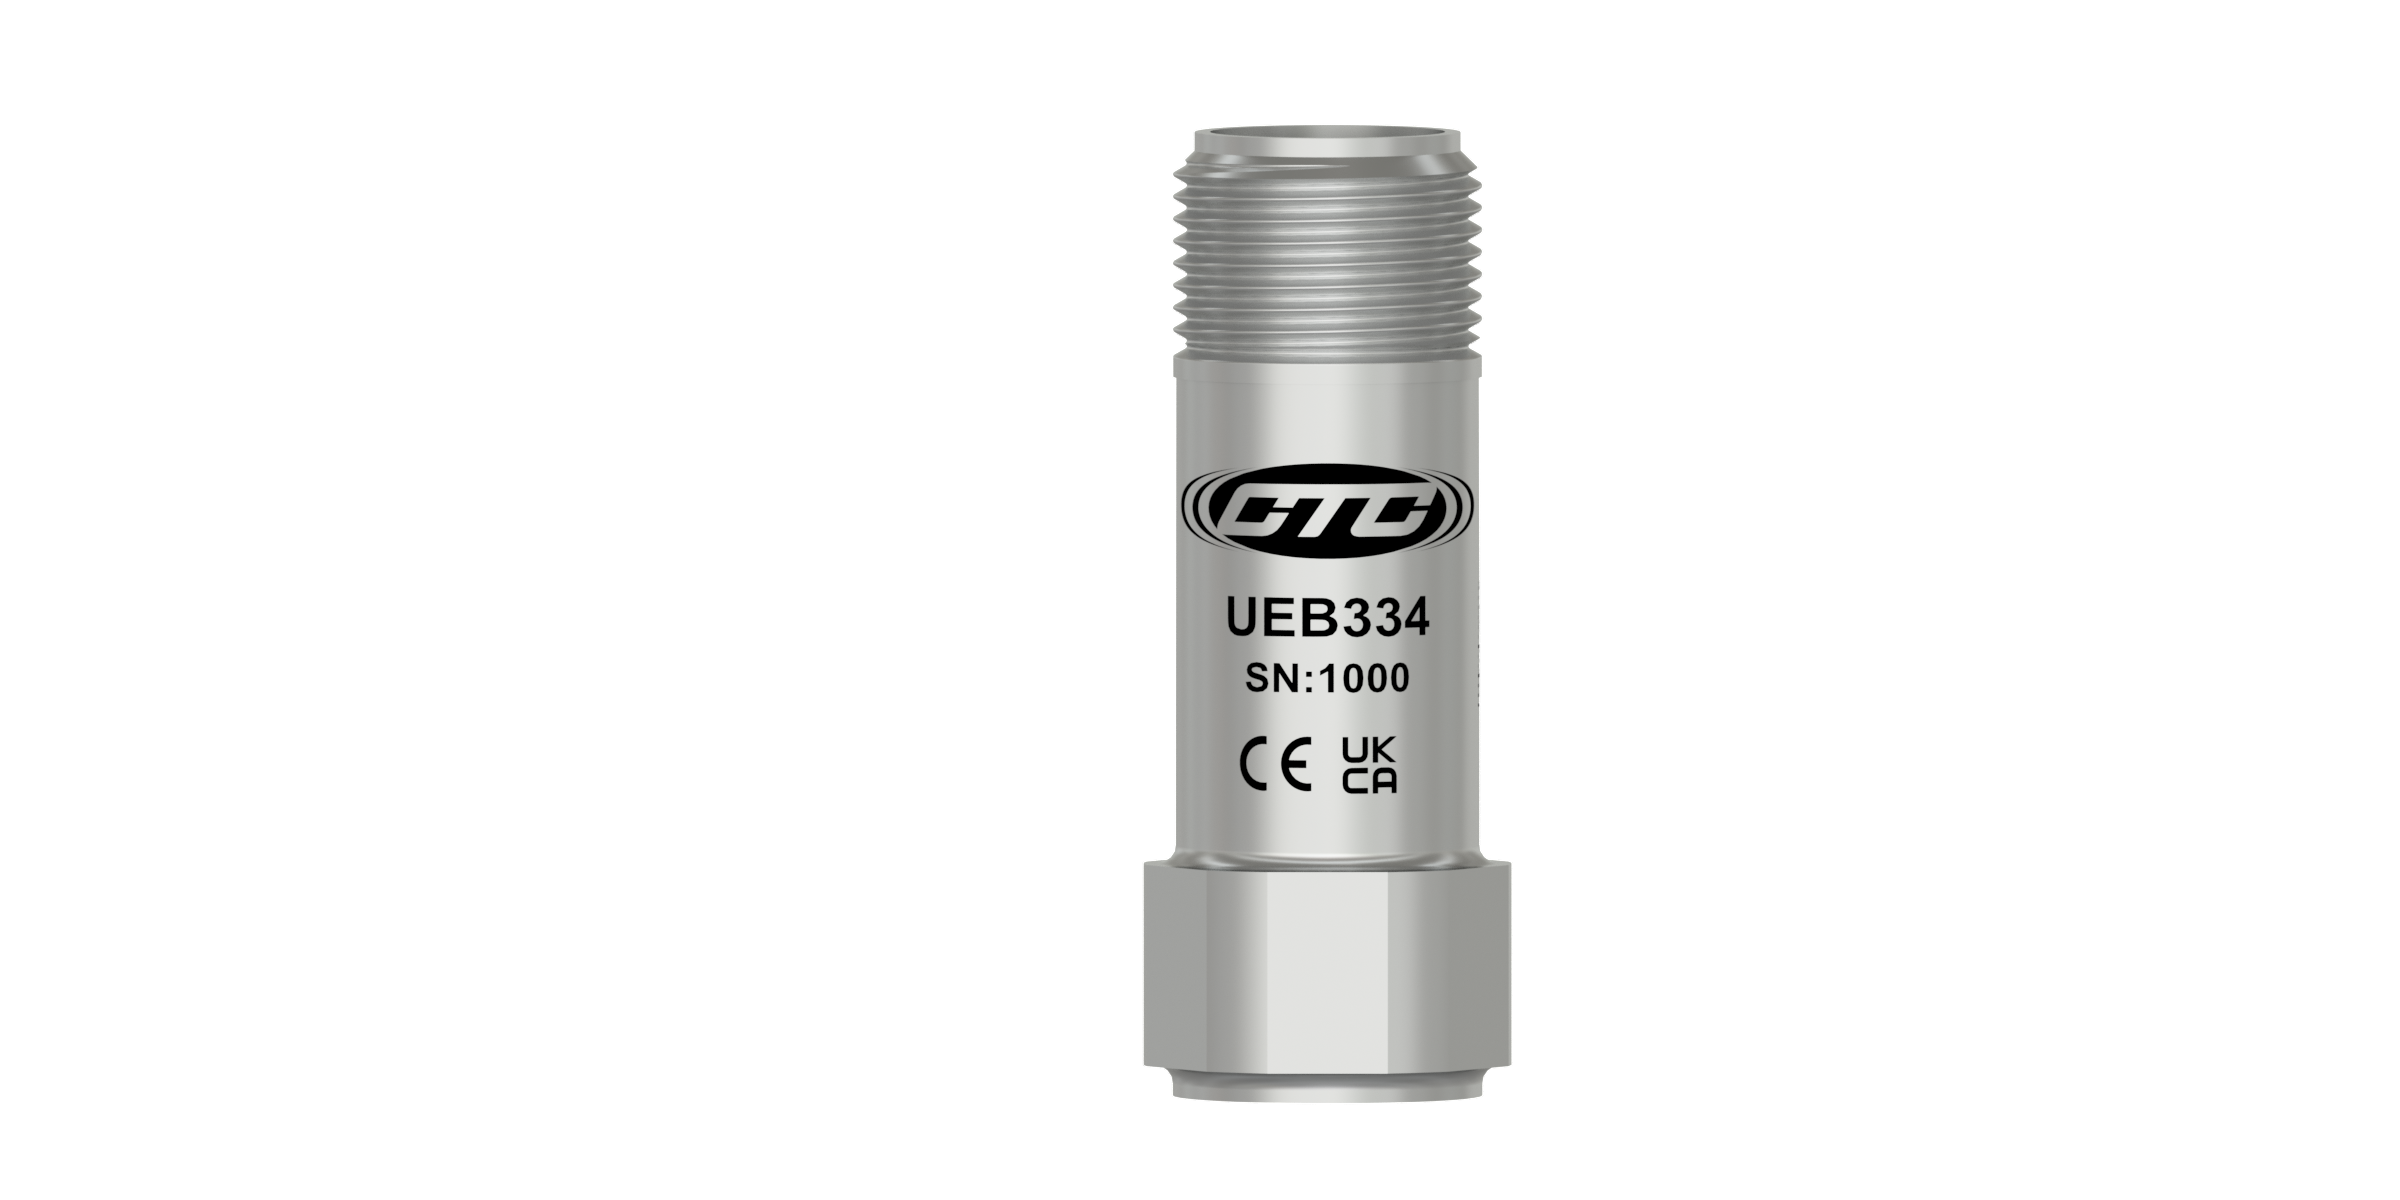 UEB334 ultrasound accelerometer for vibration analysis.